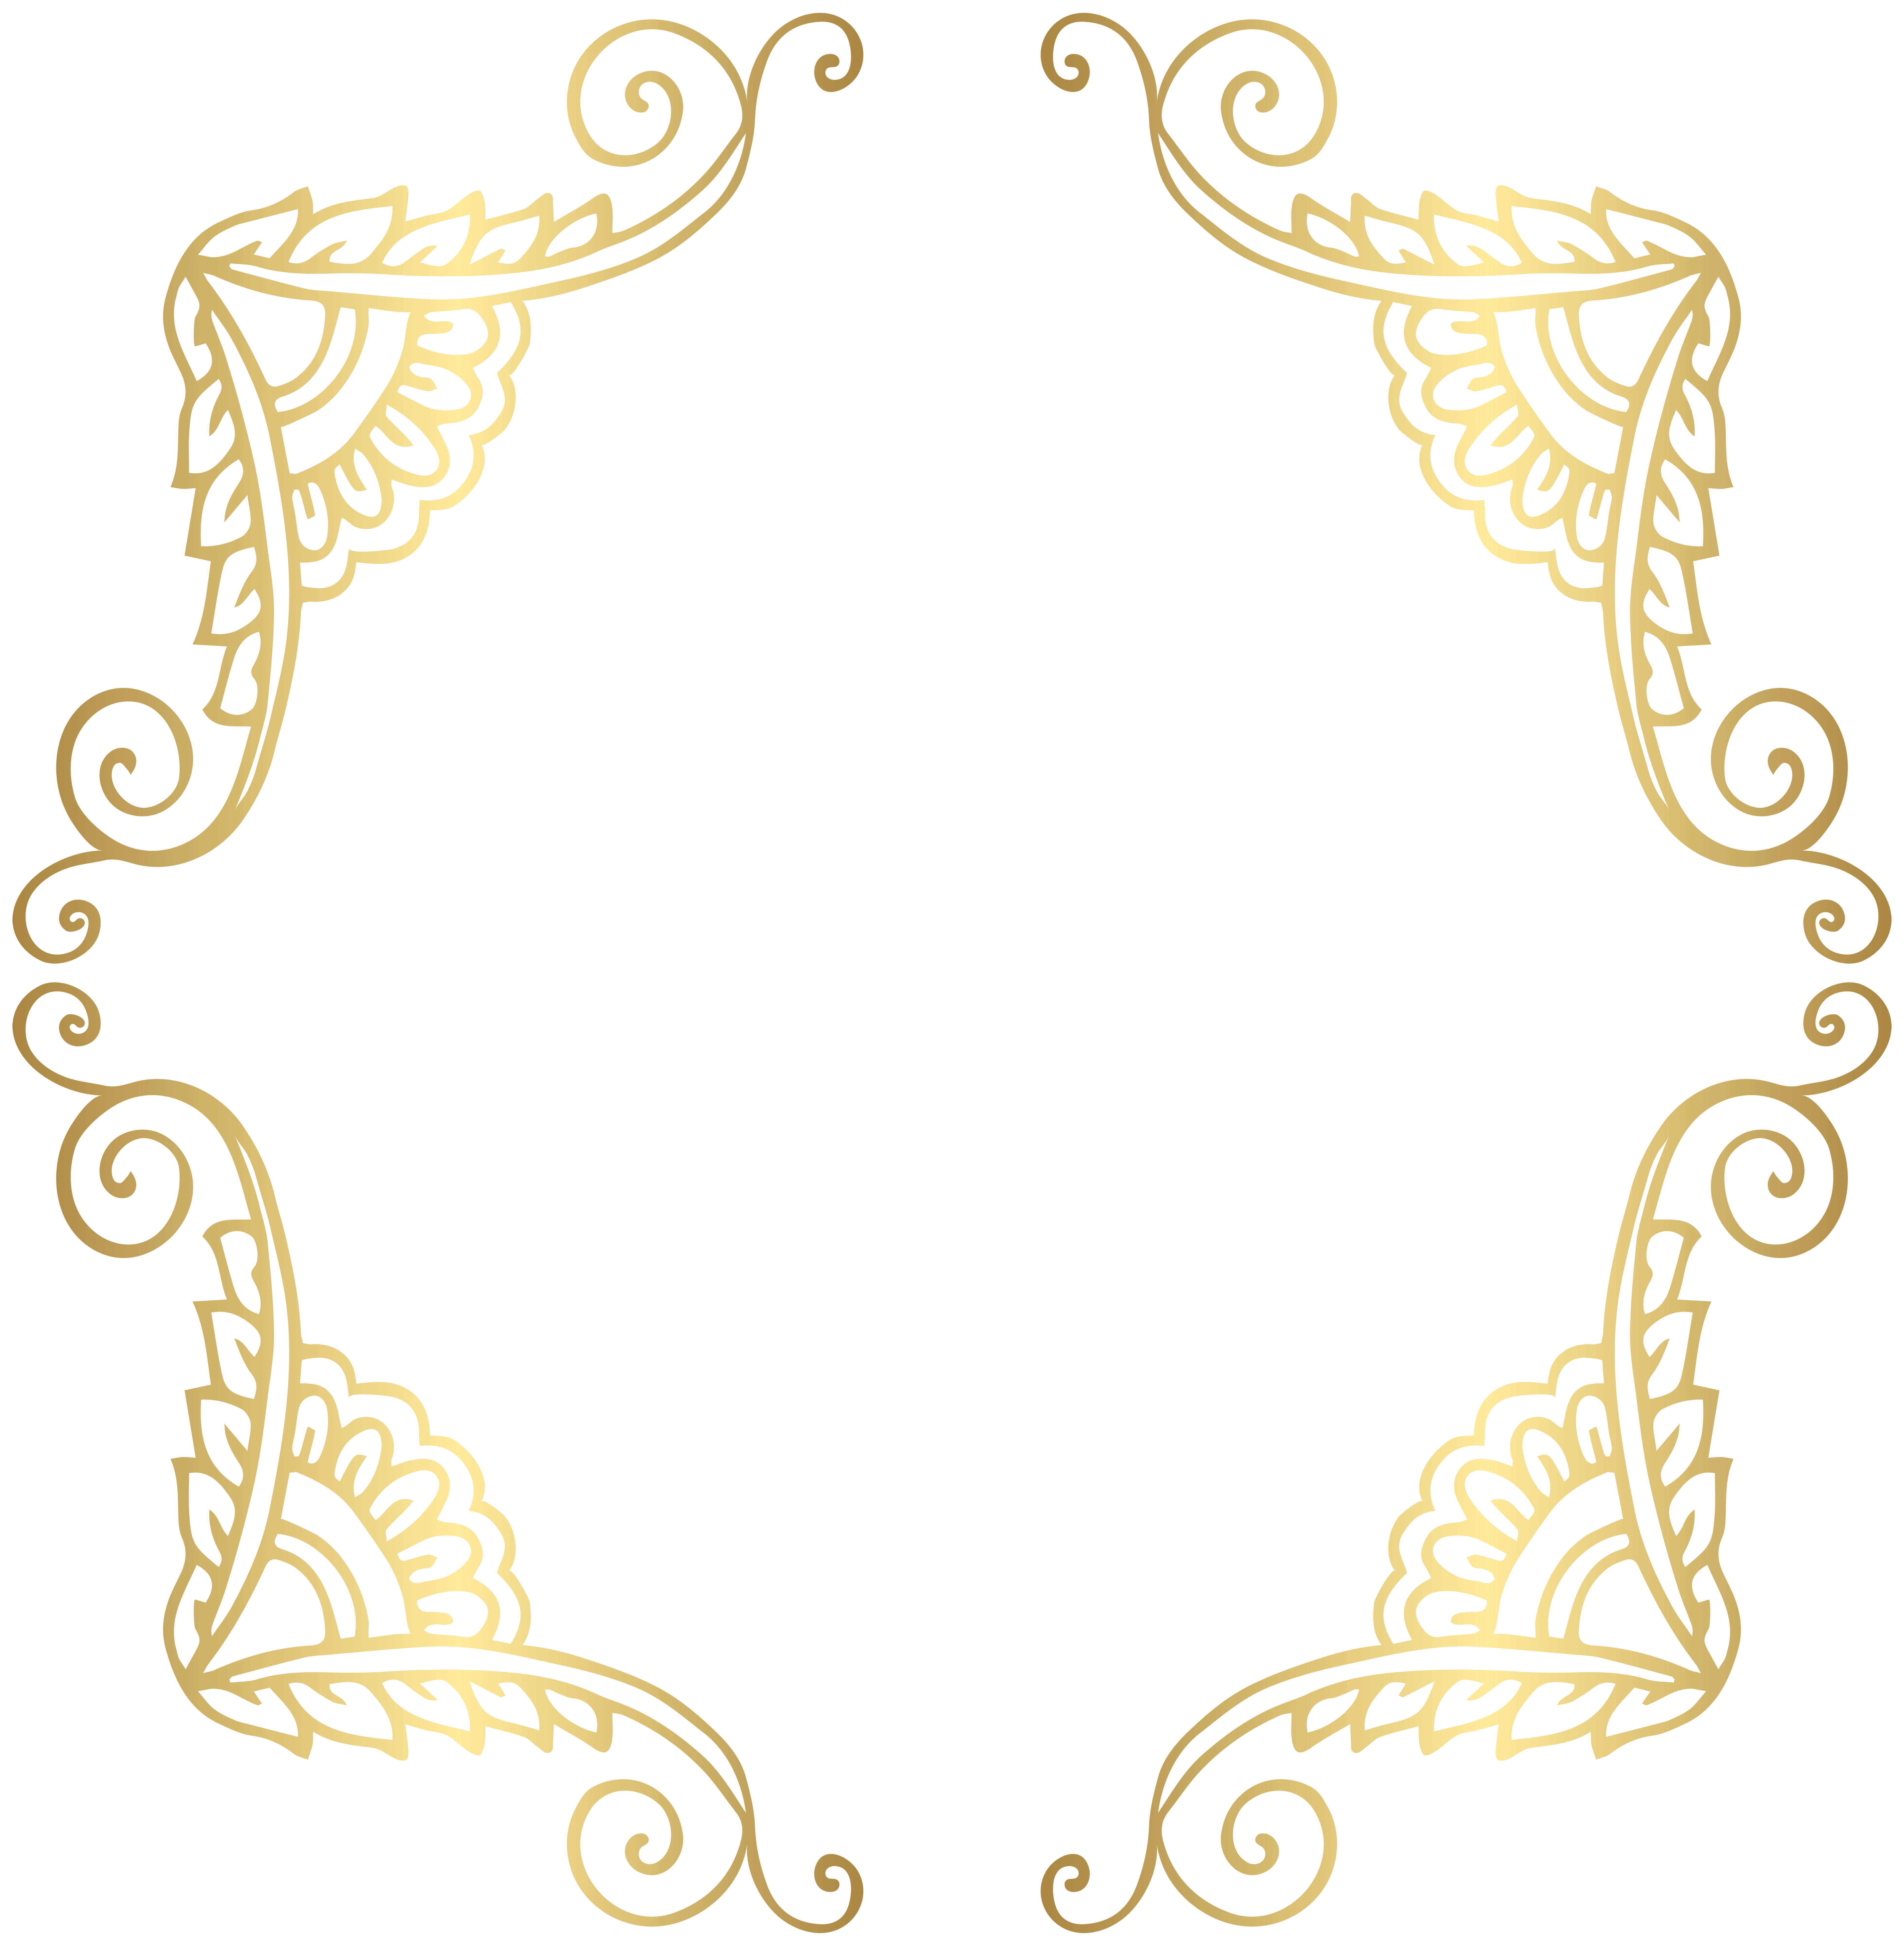 gold swirl border